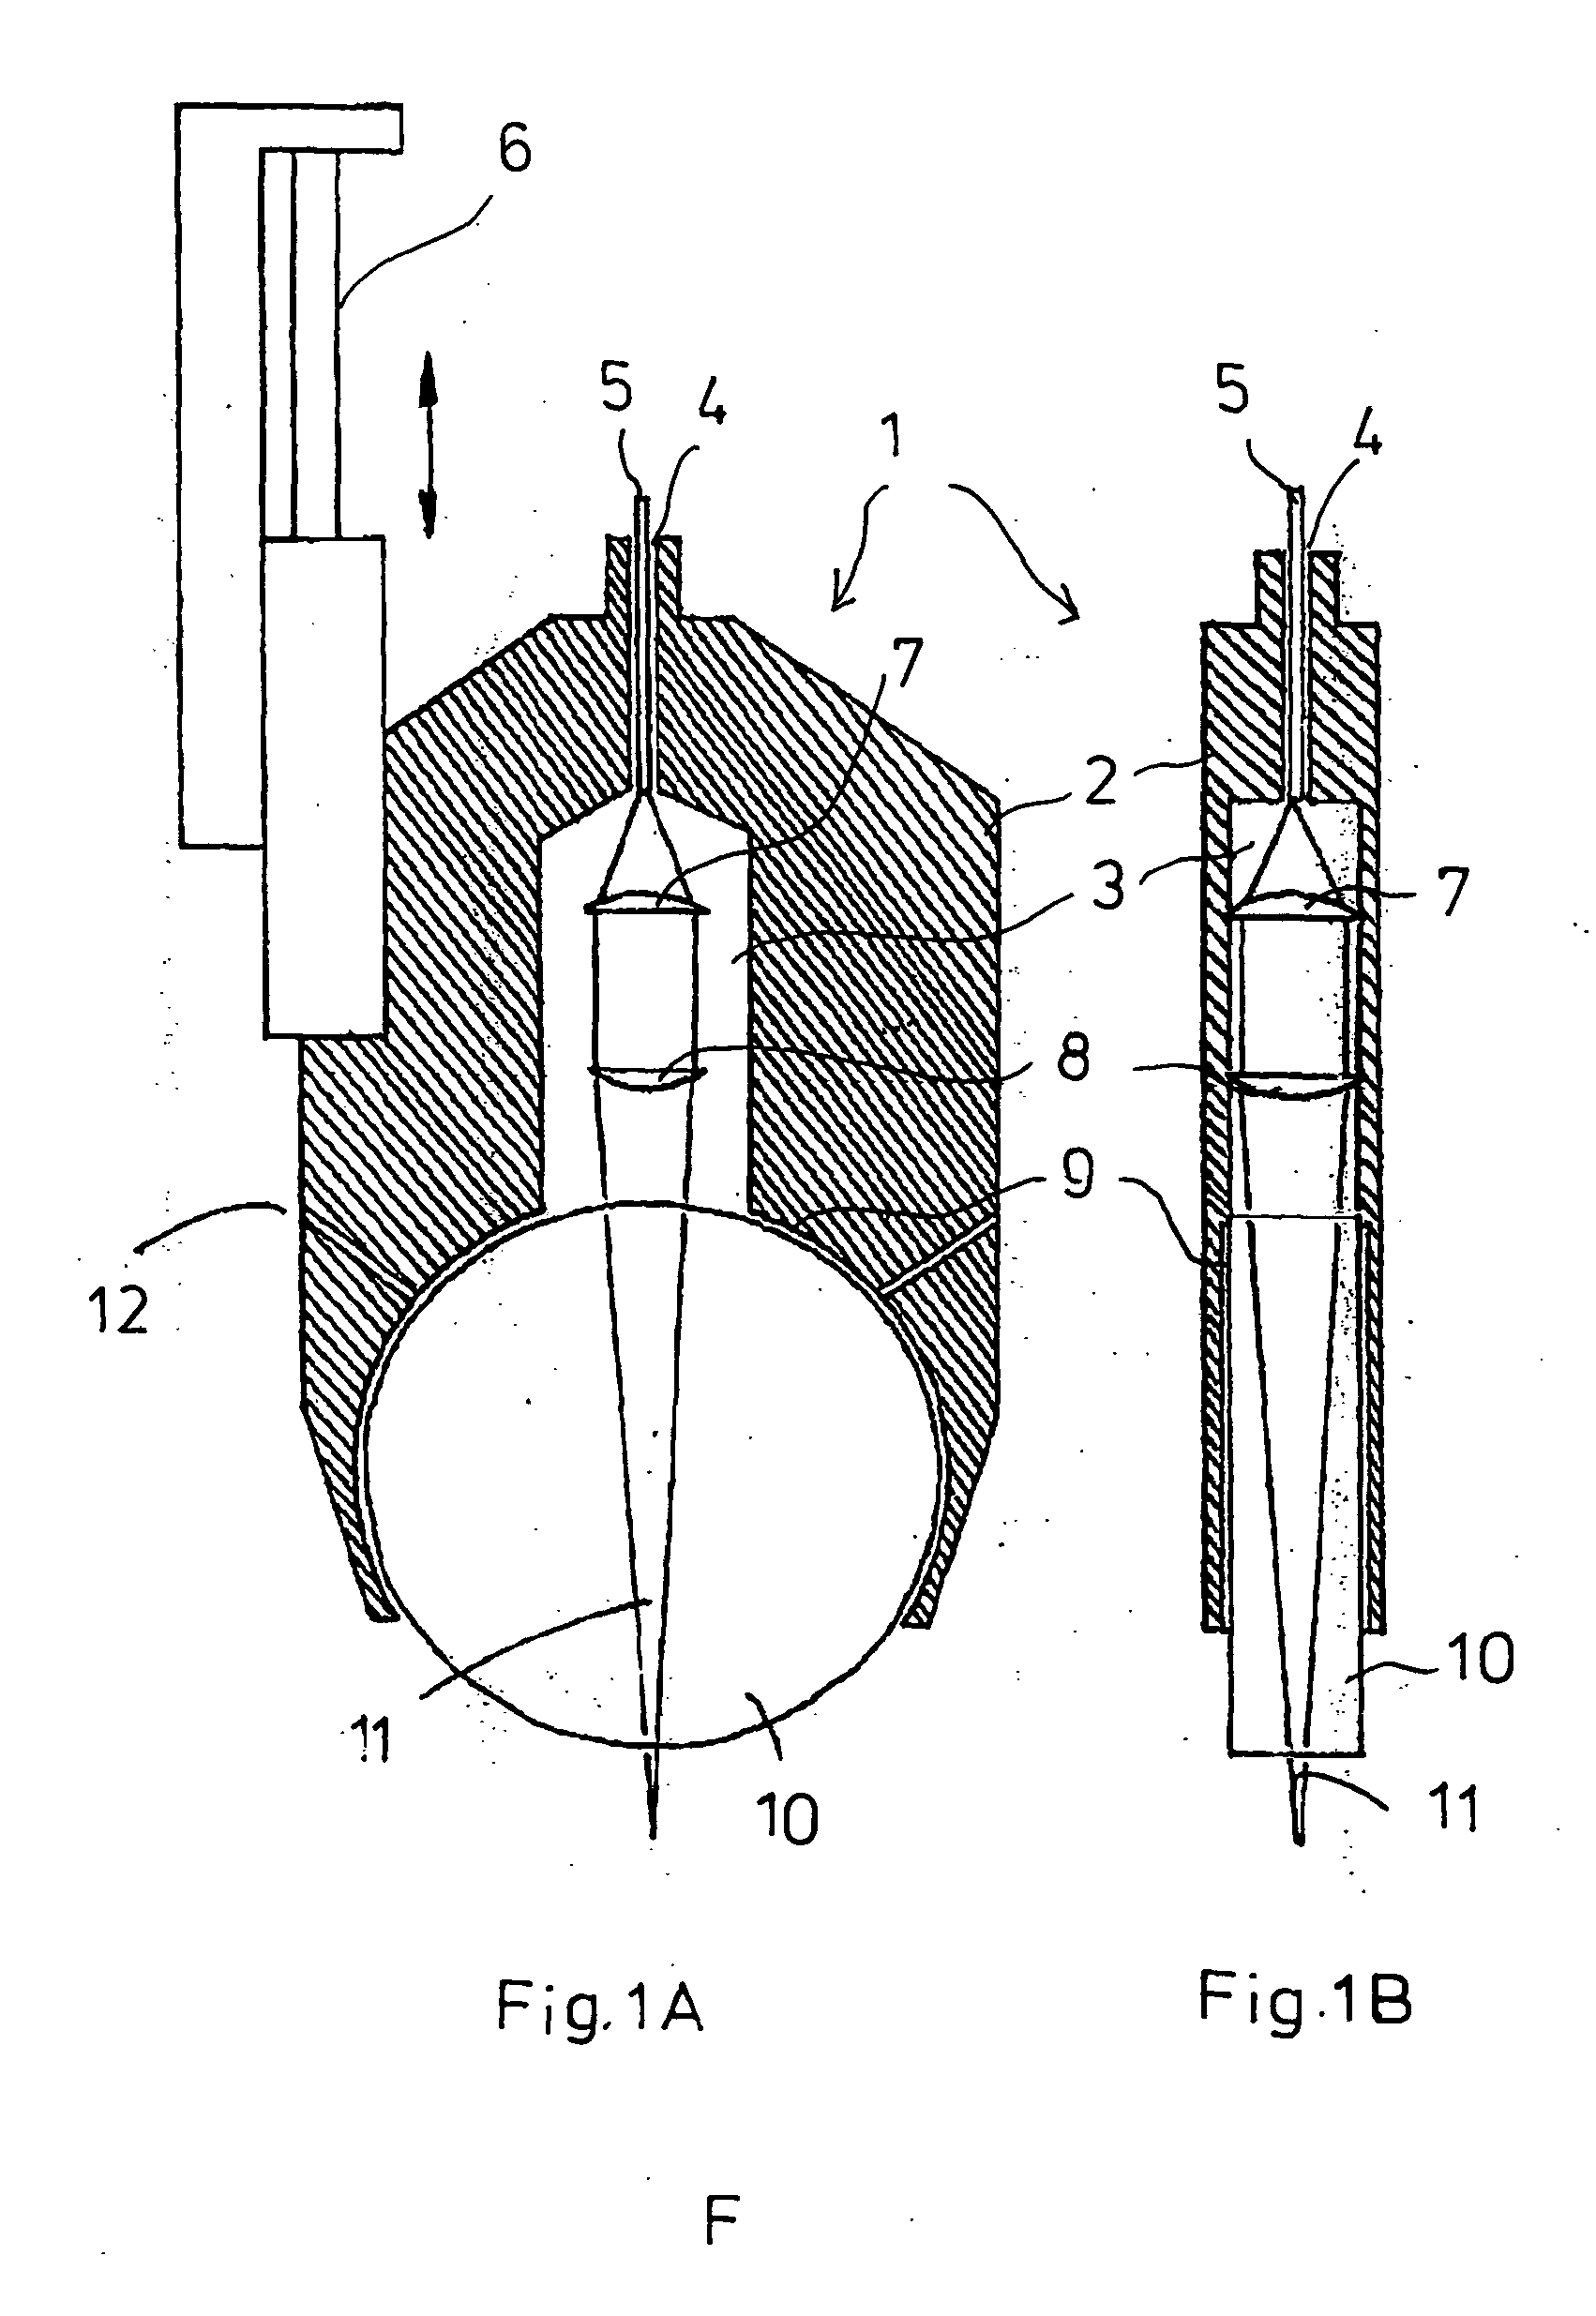 Apparatus for connecting planar plastic materials